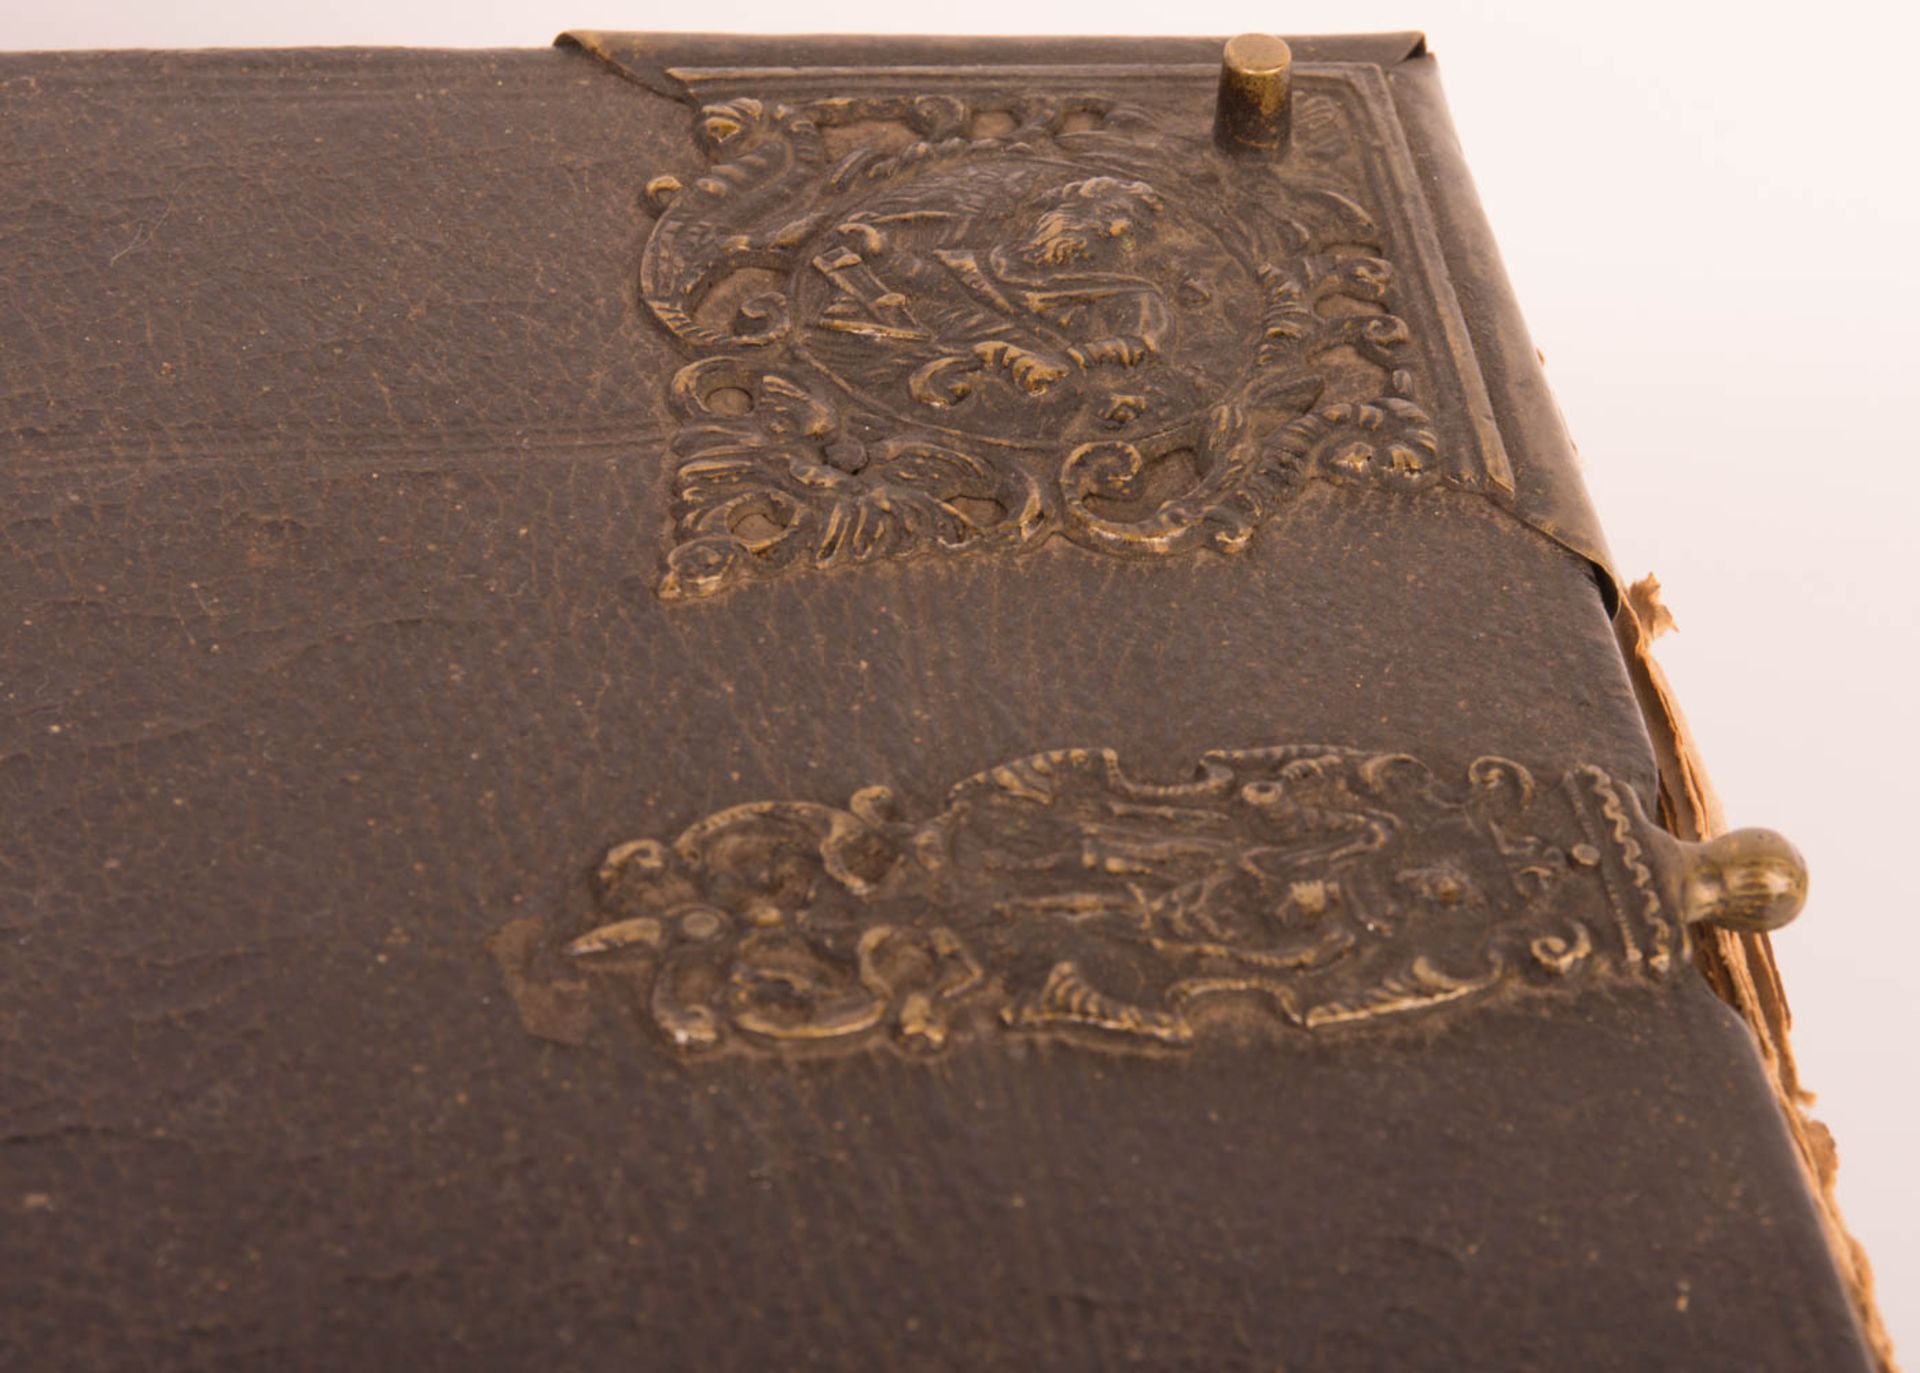 Biblia germanica, Kurfürstenbibel, Joh. Endters Sel. Sohn und Erben, Nürnberg, 1708. - Bild 4 aus 13